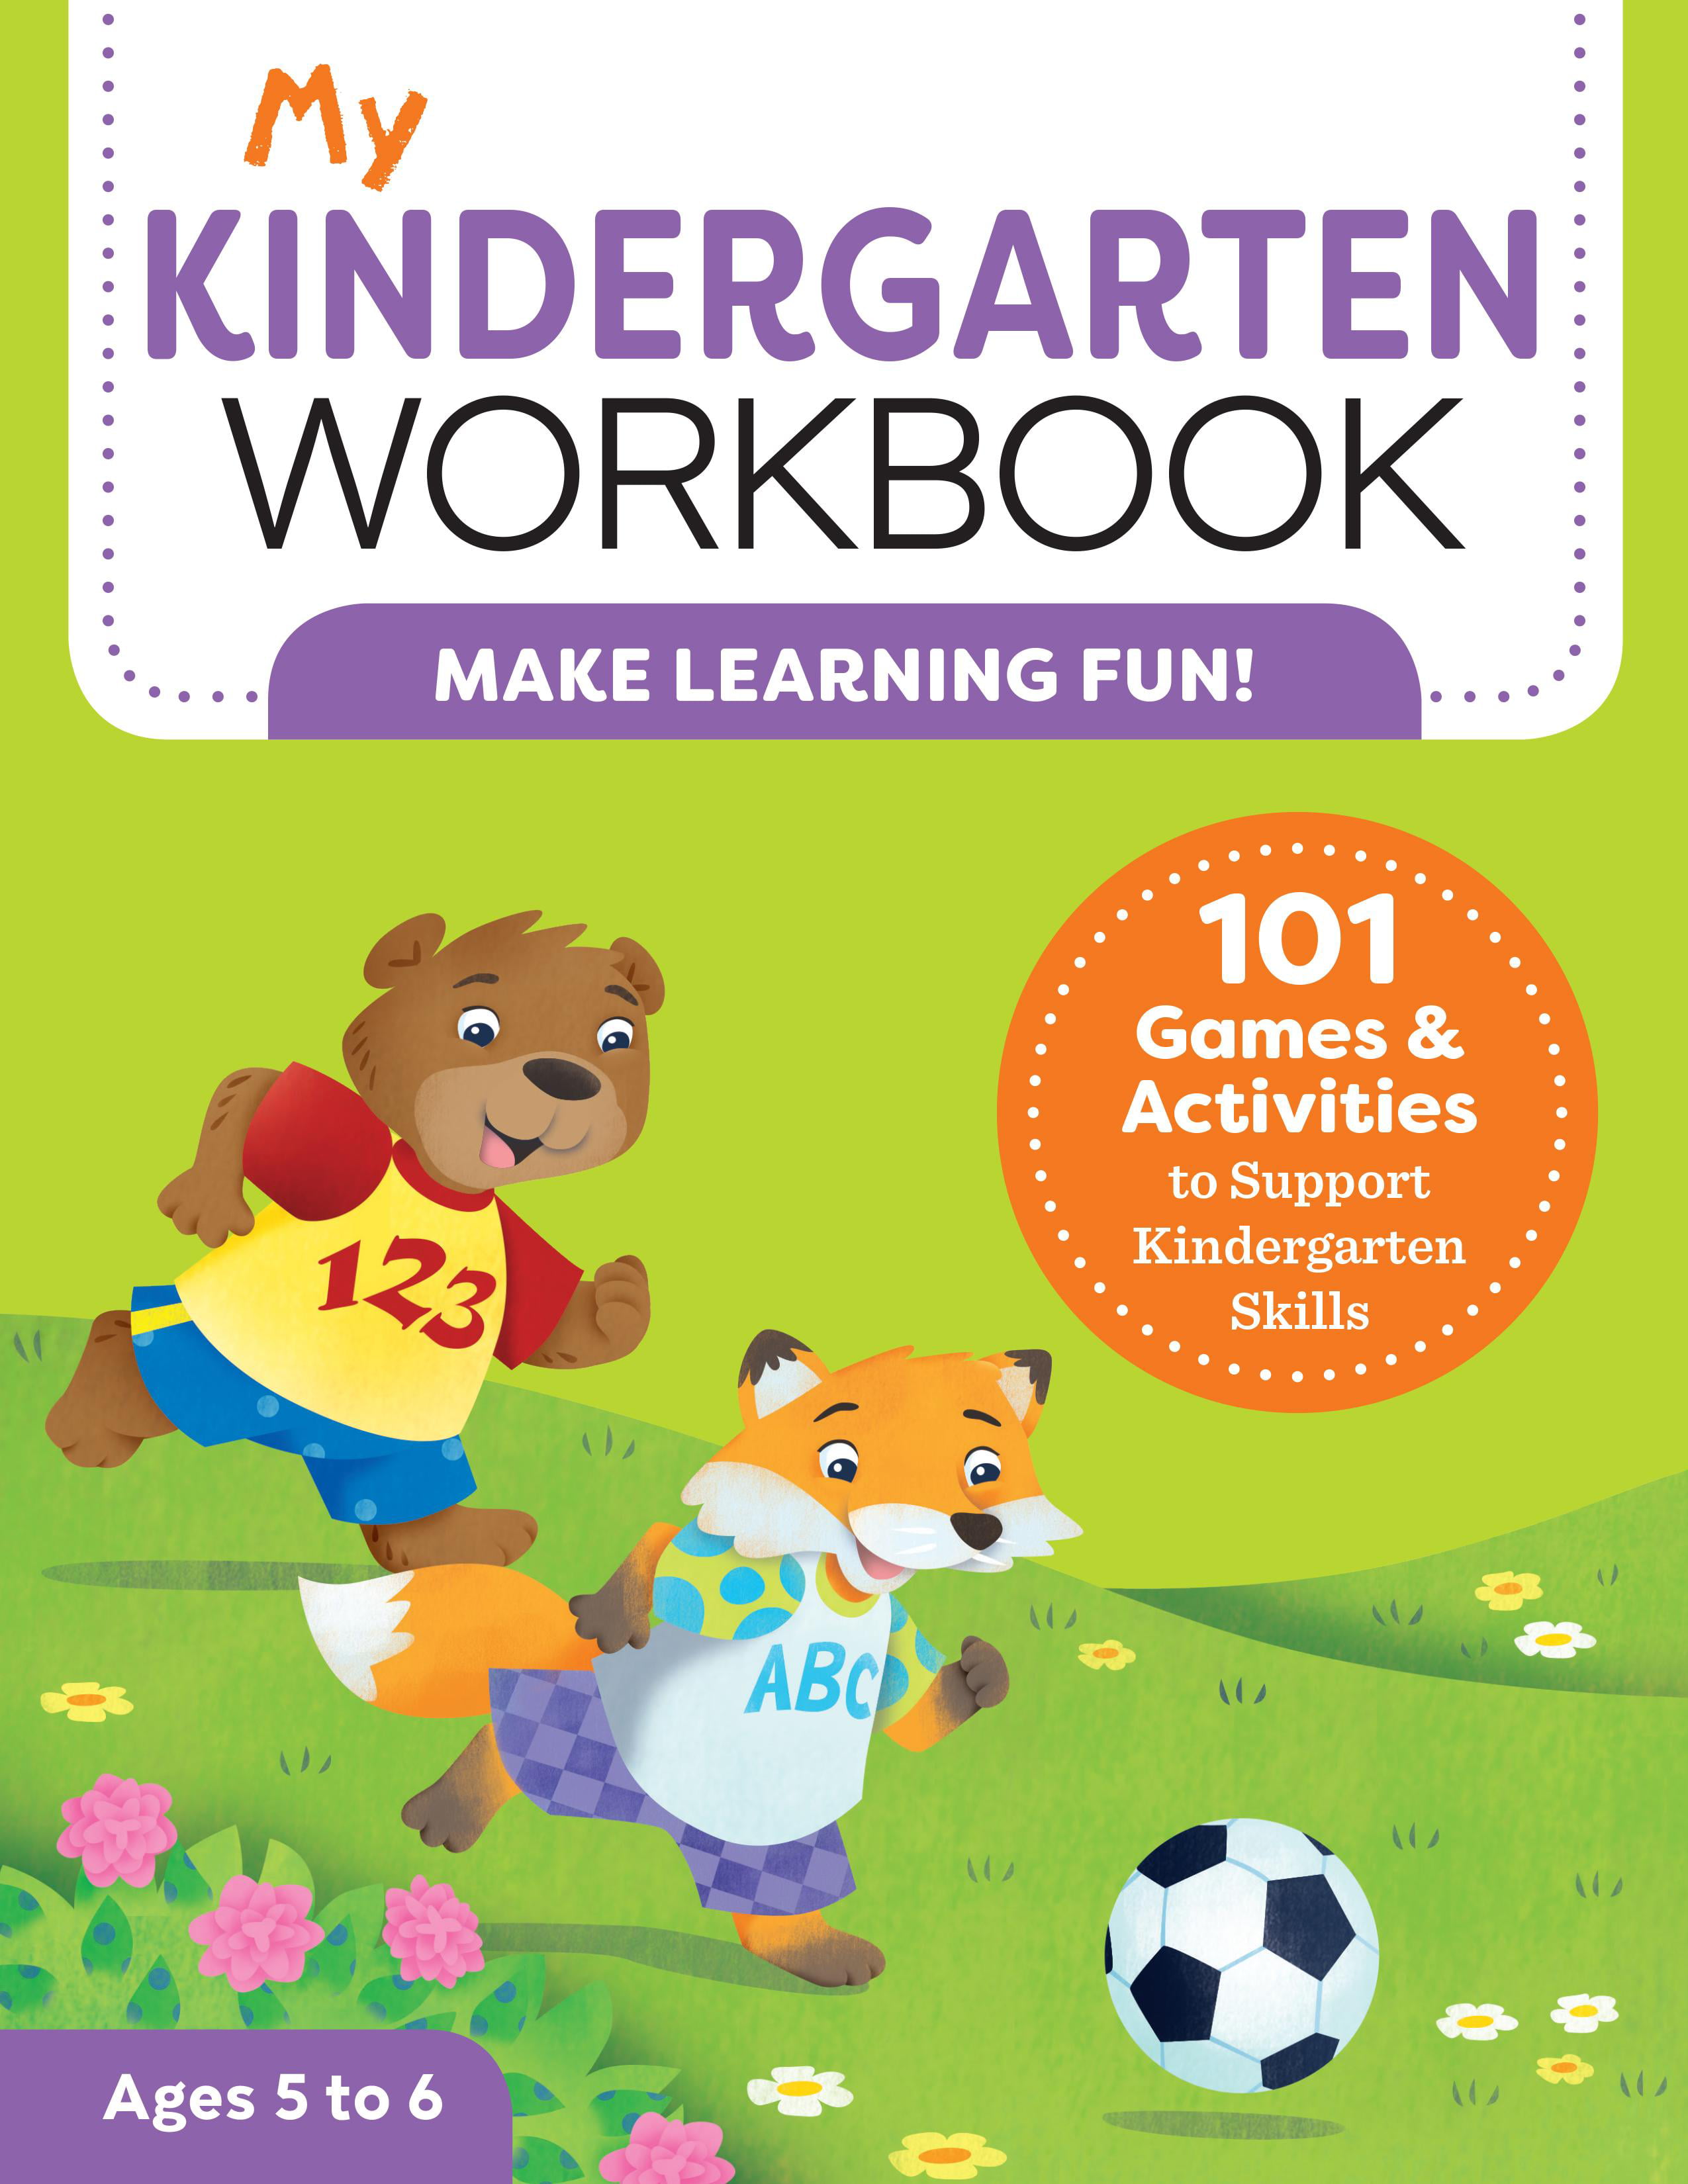 homework workbook kindergarten